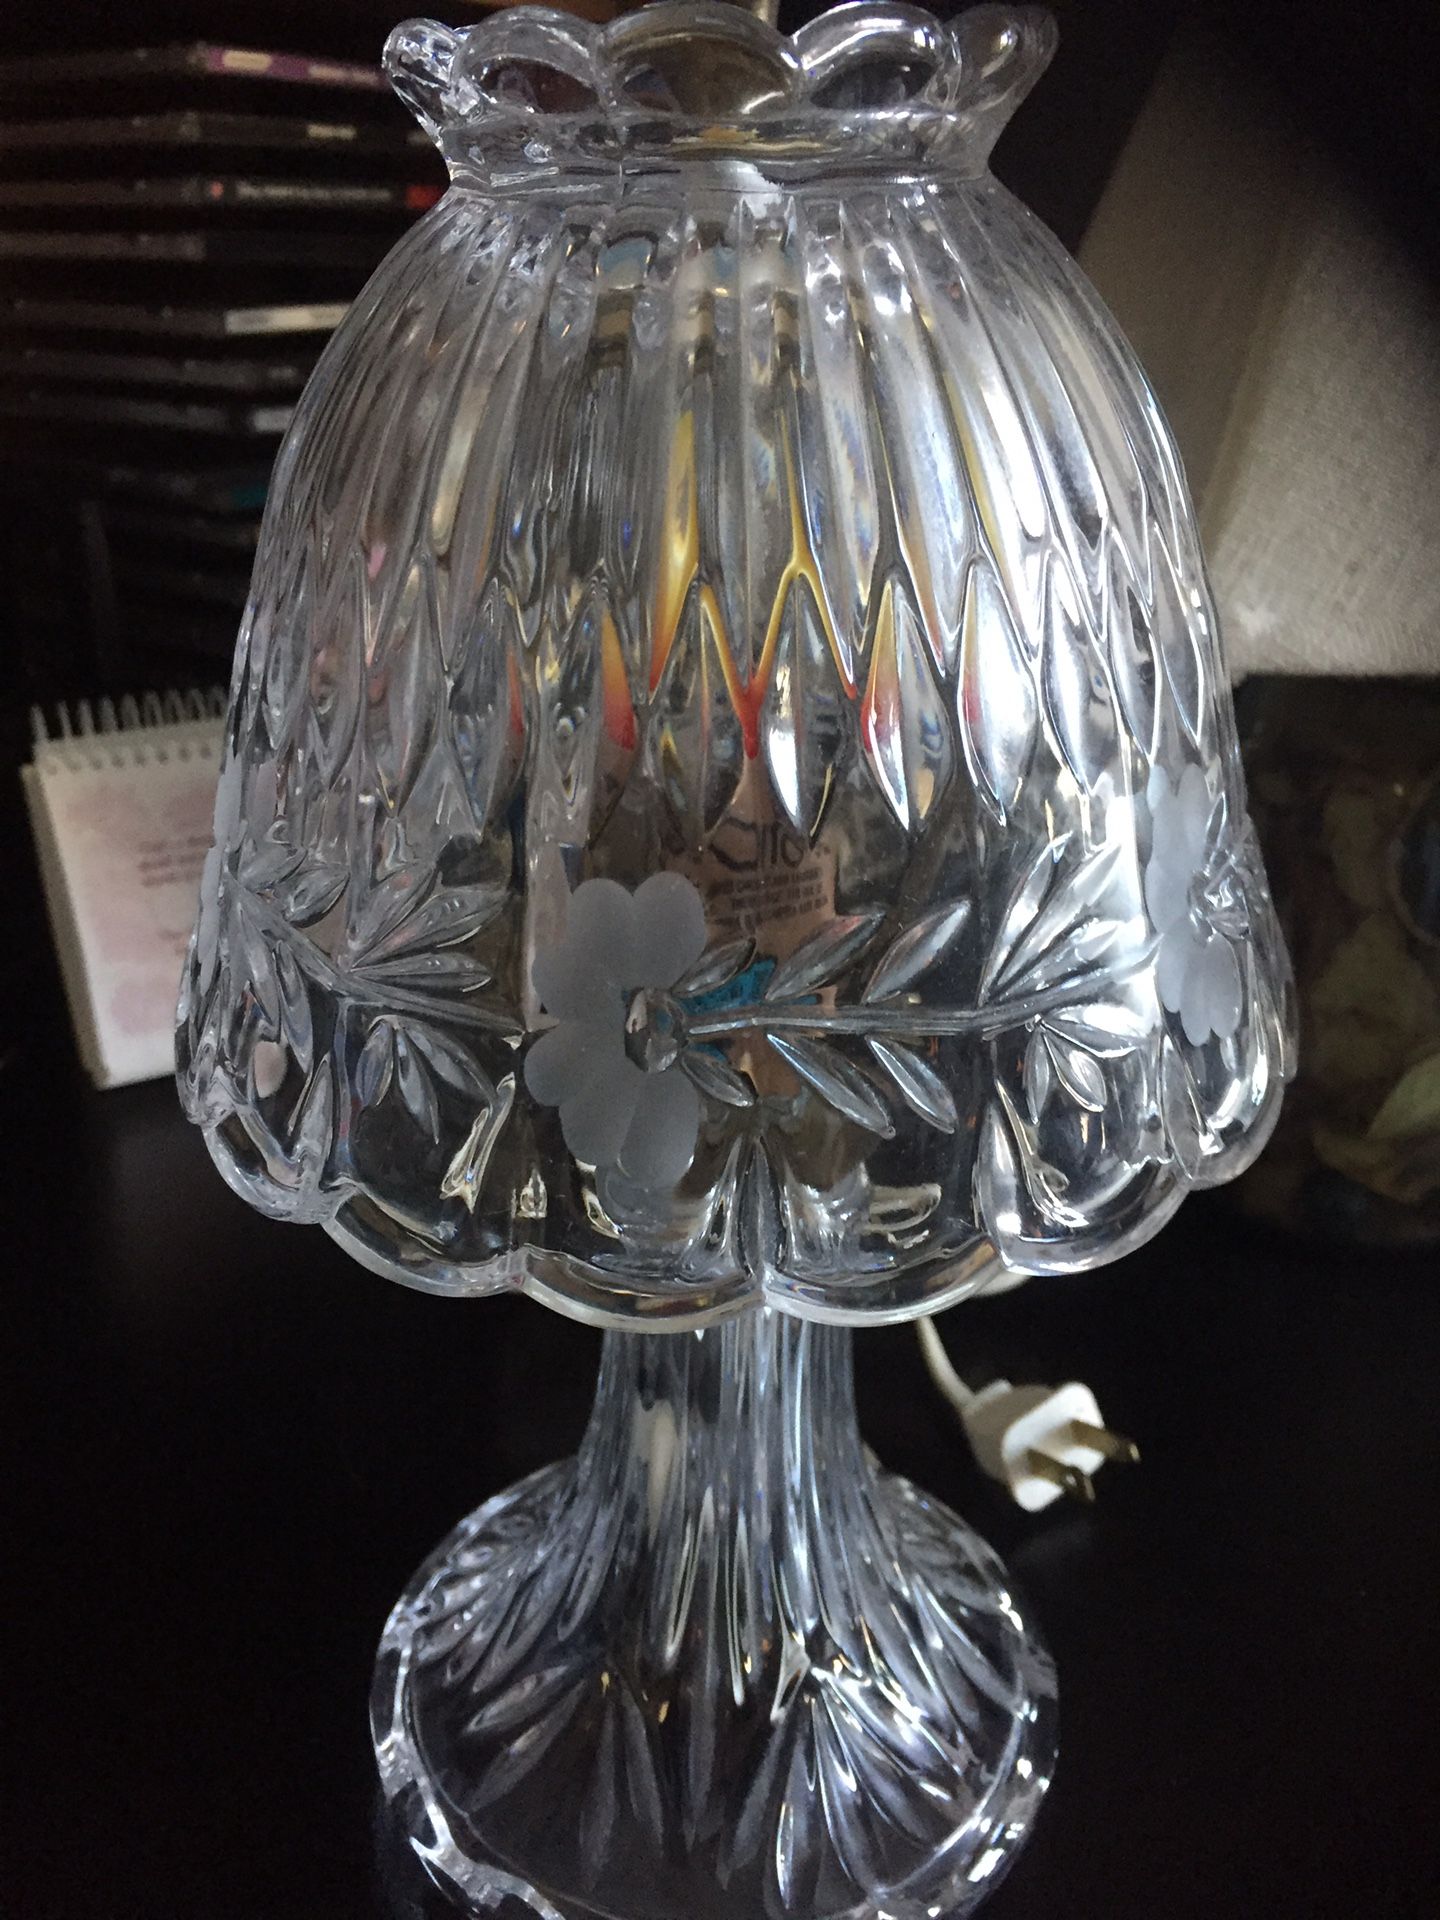 Small glass lamp